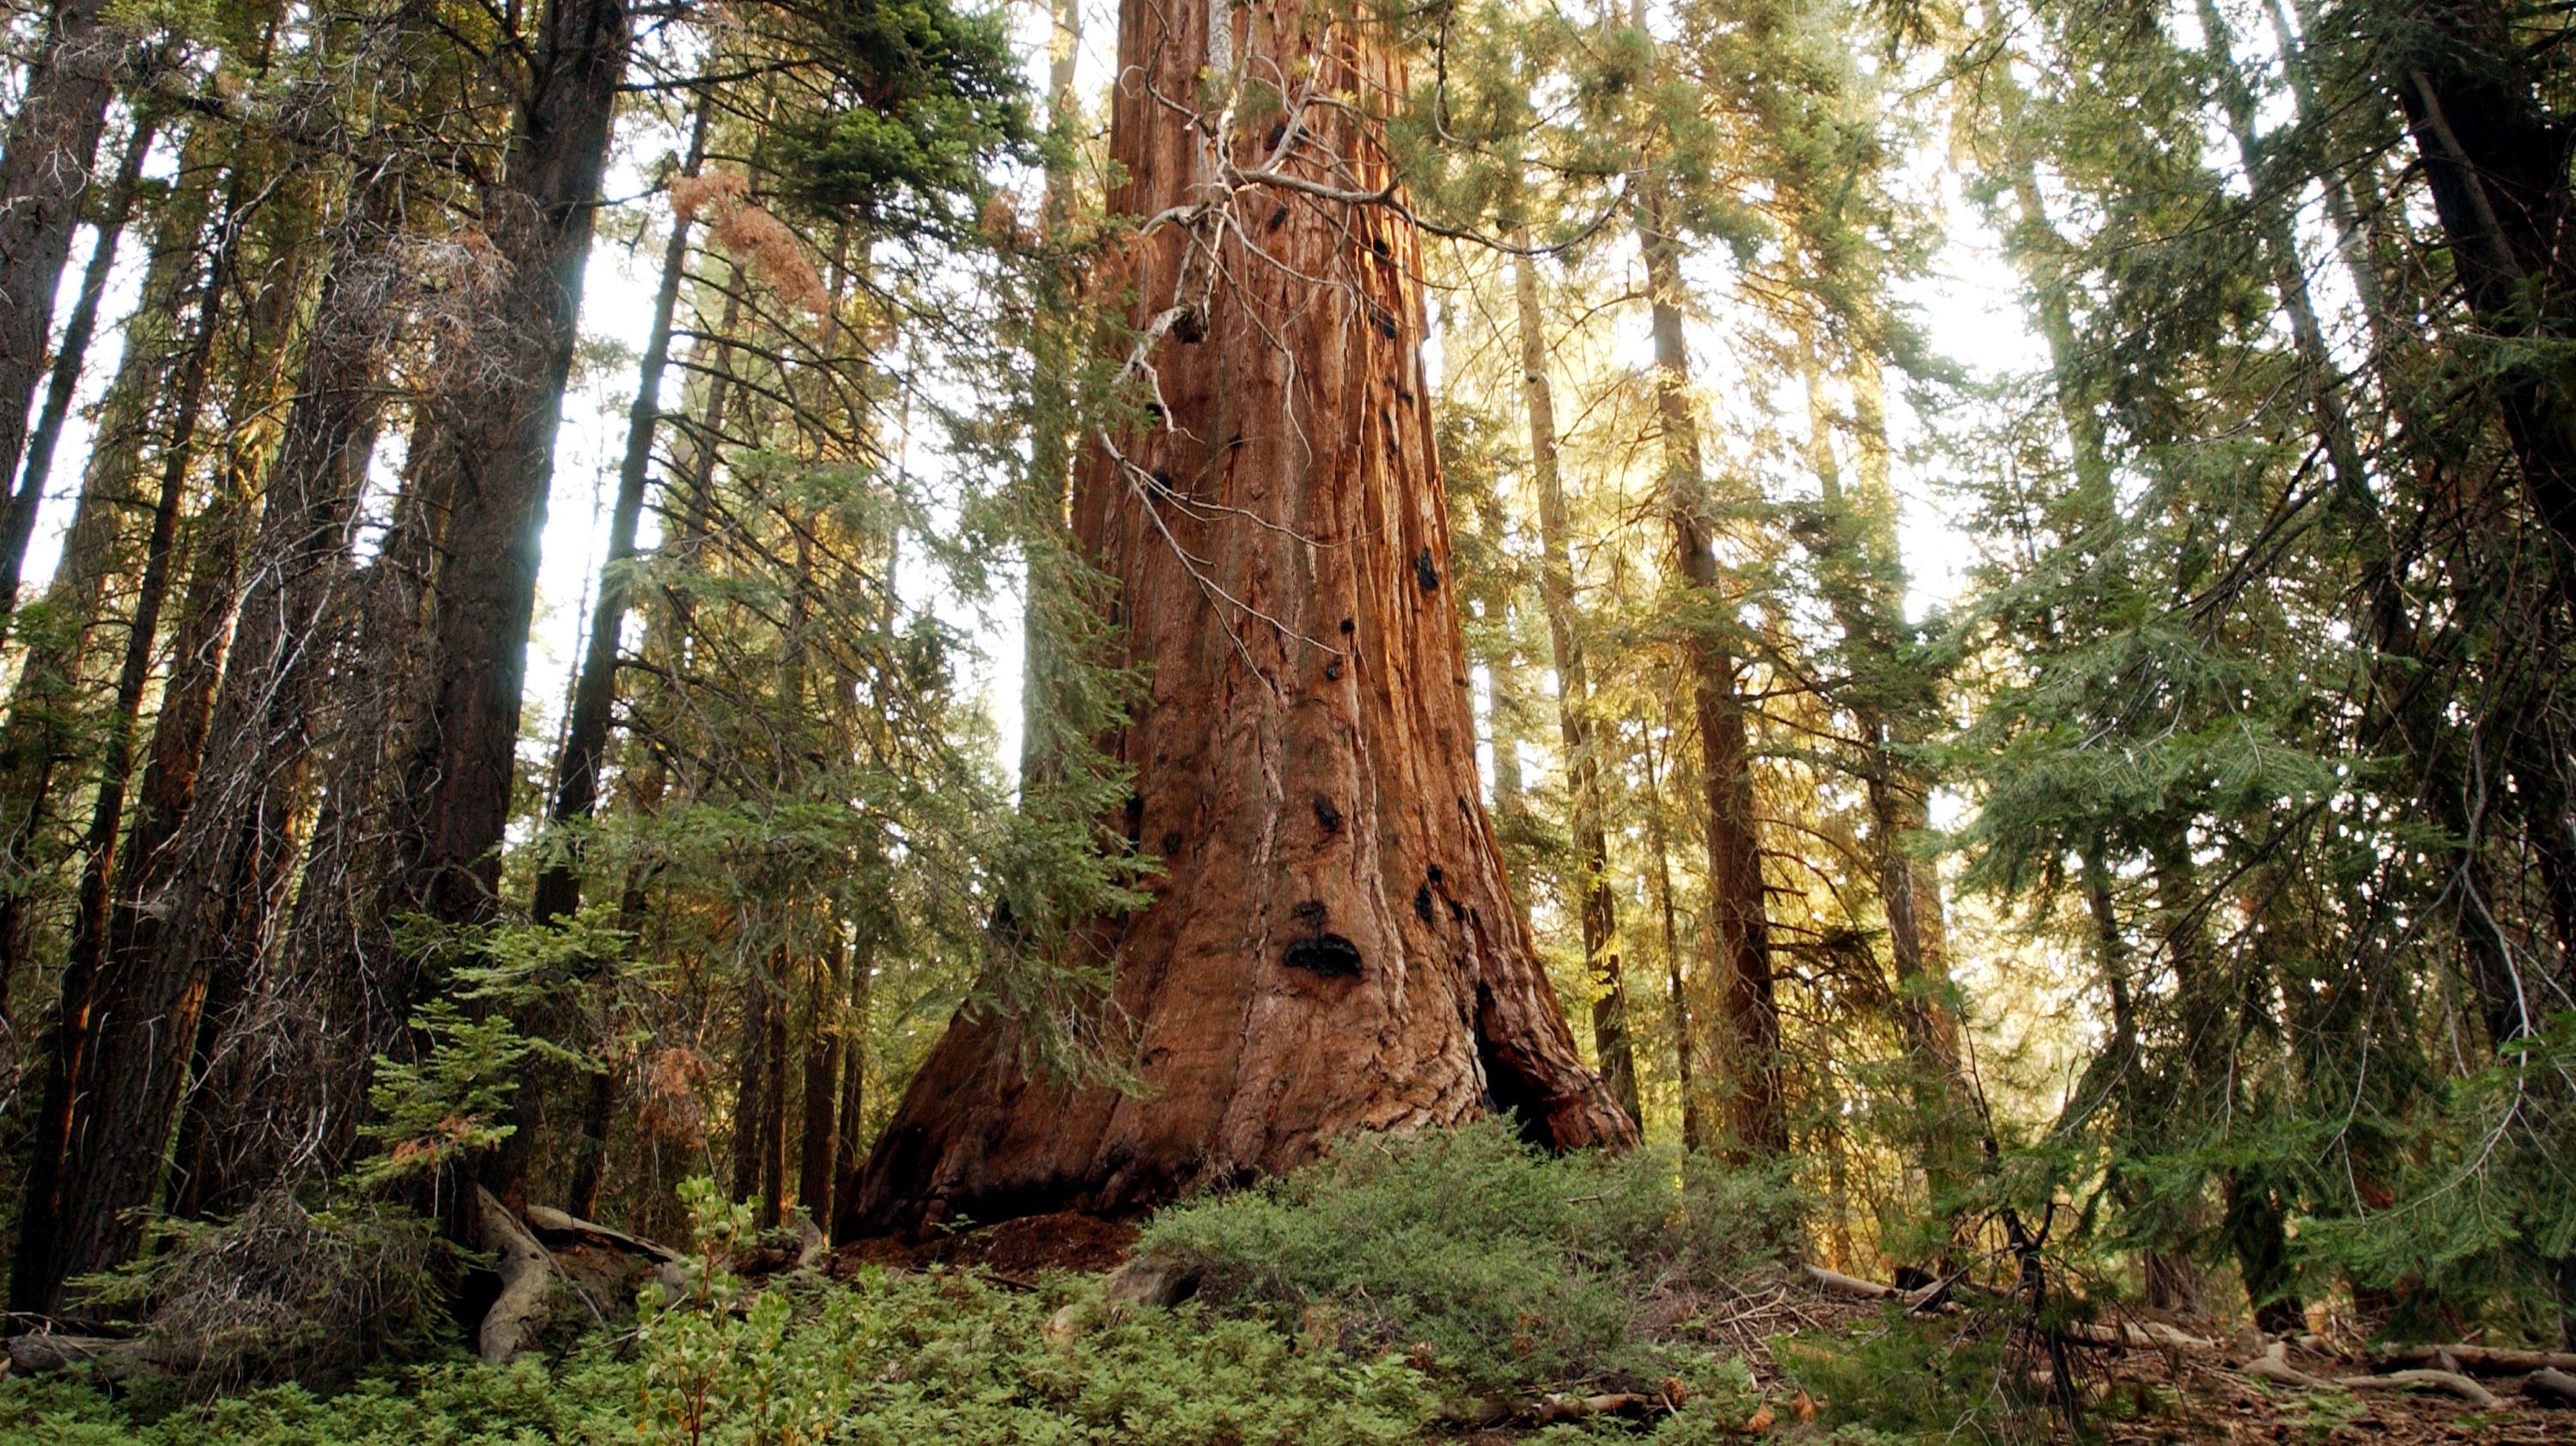 McNally Fire Threatens Giant Sequoia Trees